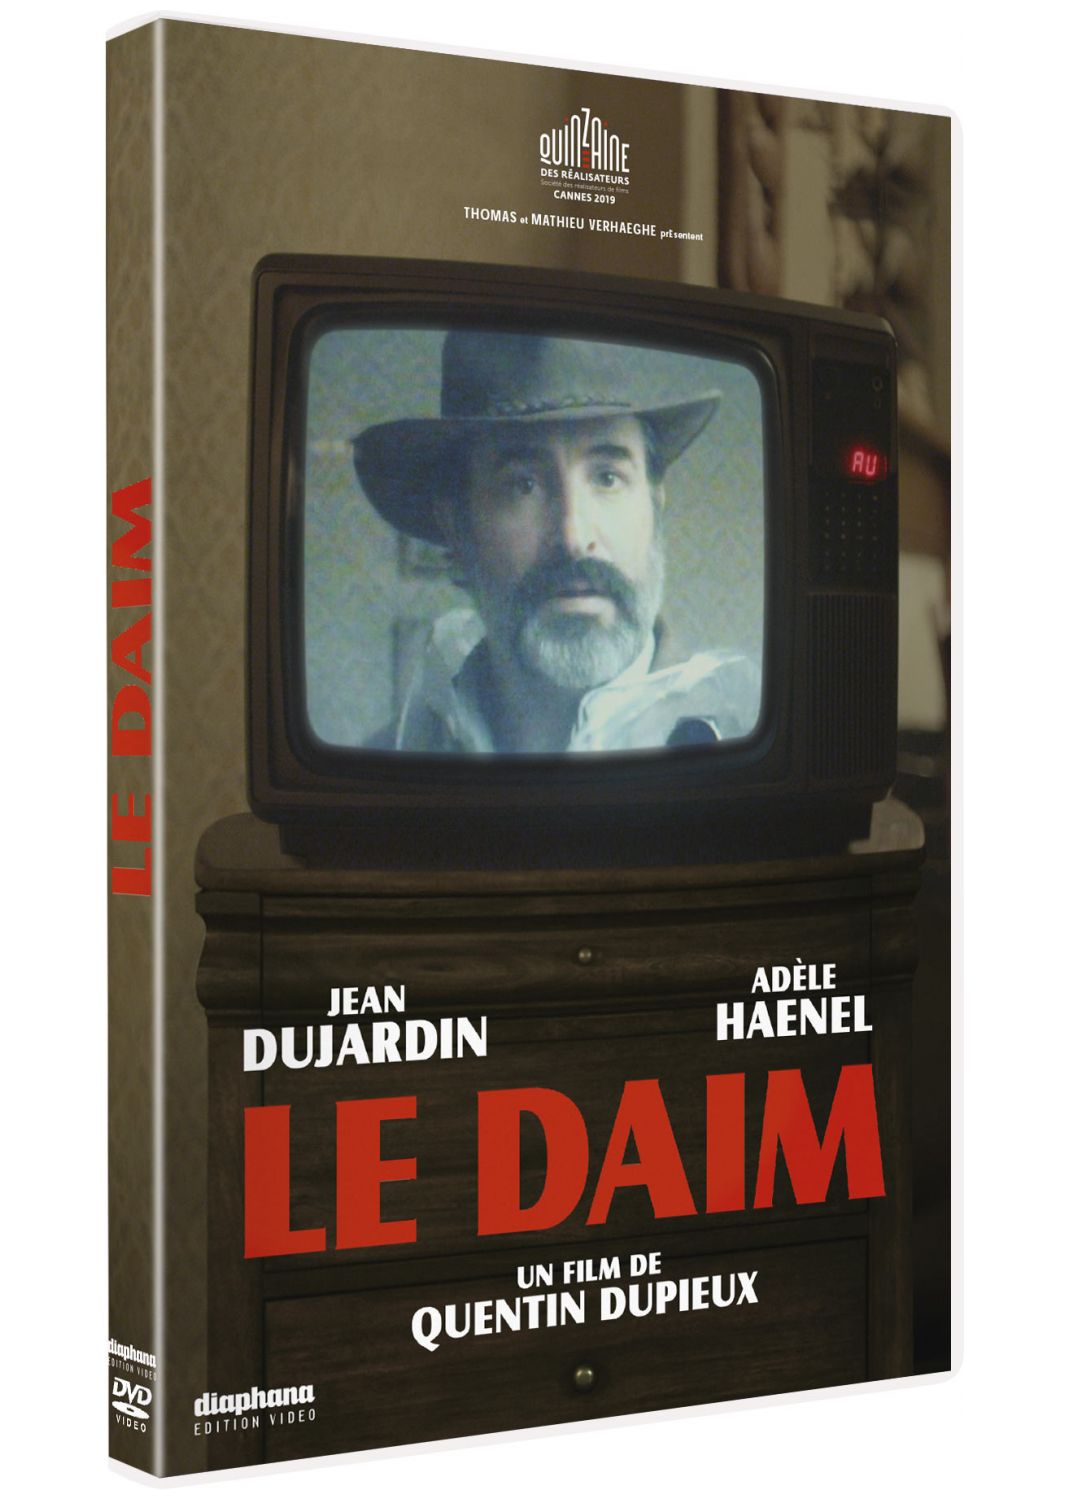 Le Daim [DVD OCCASION]